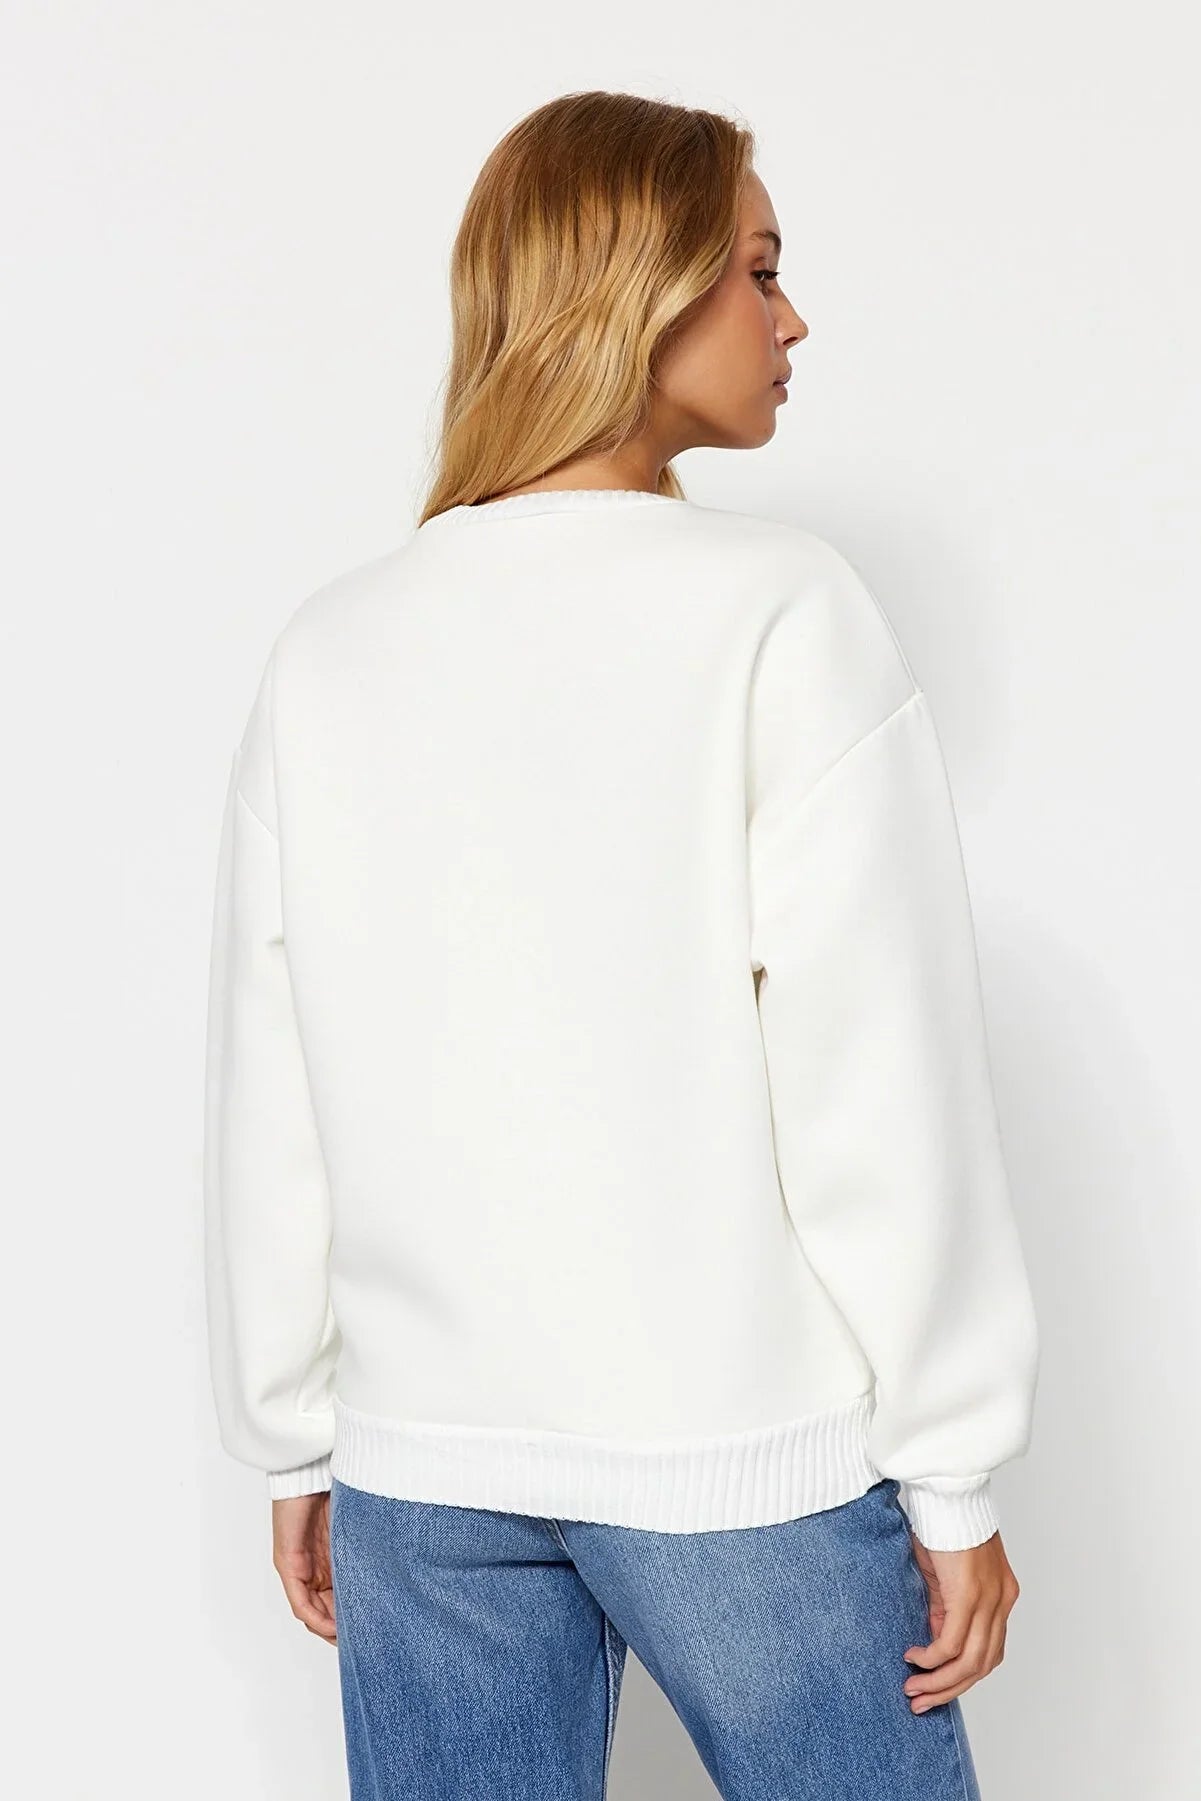 Trendyol Printed Design Off White Sweater